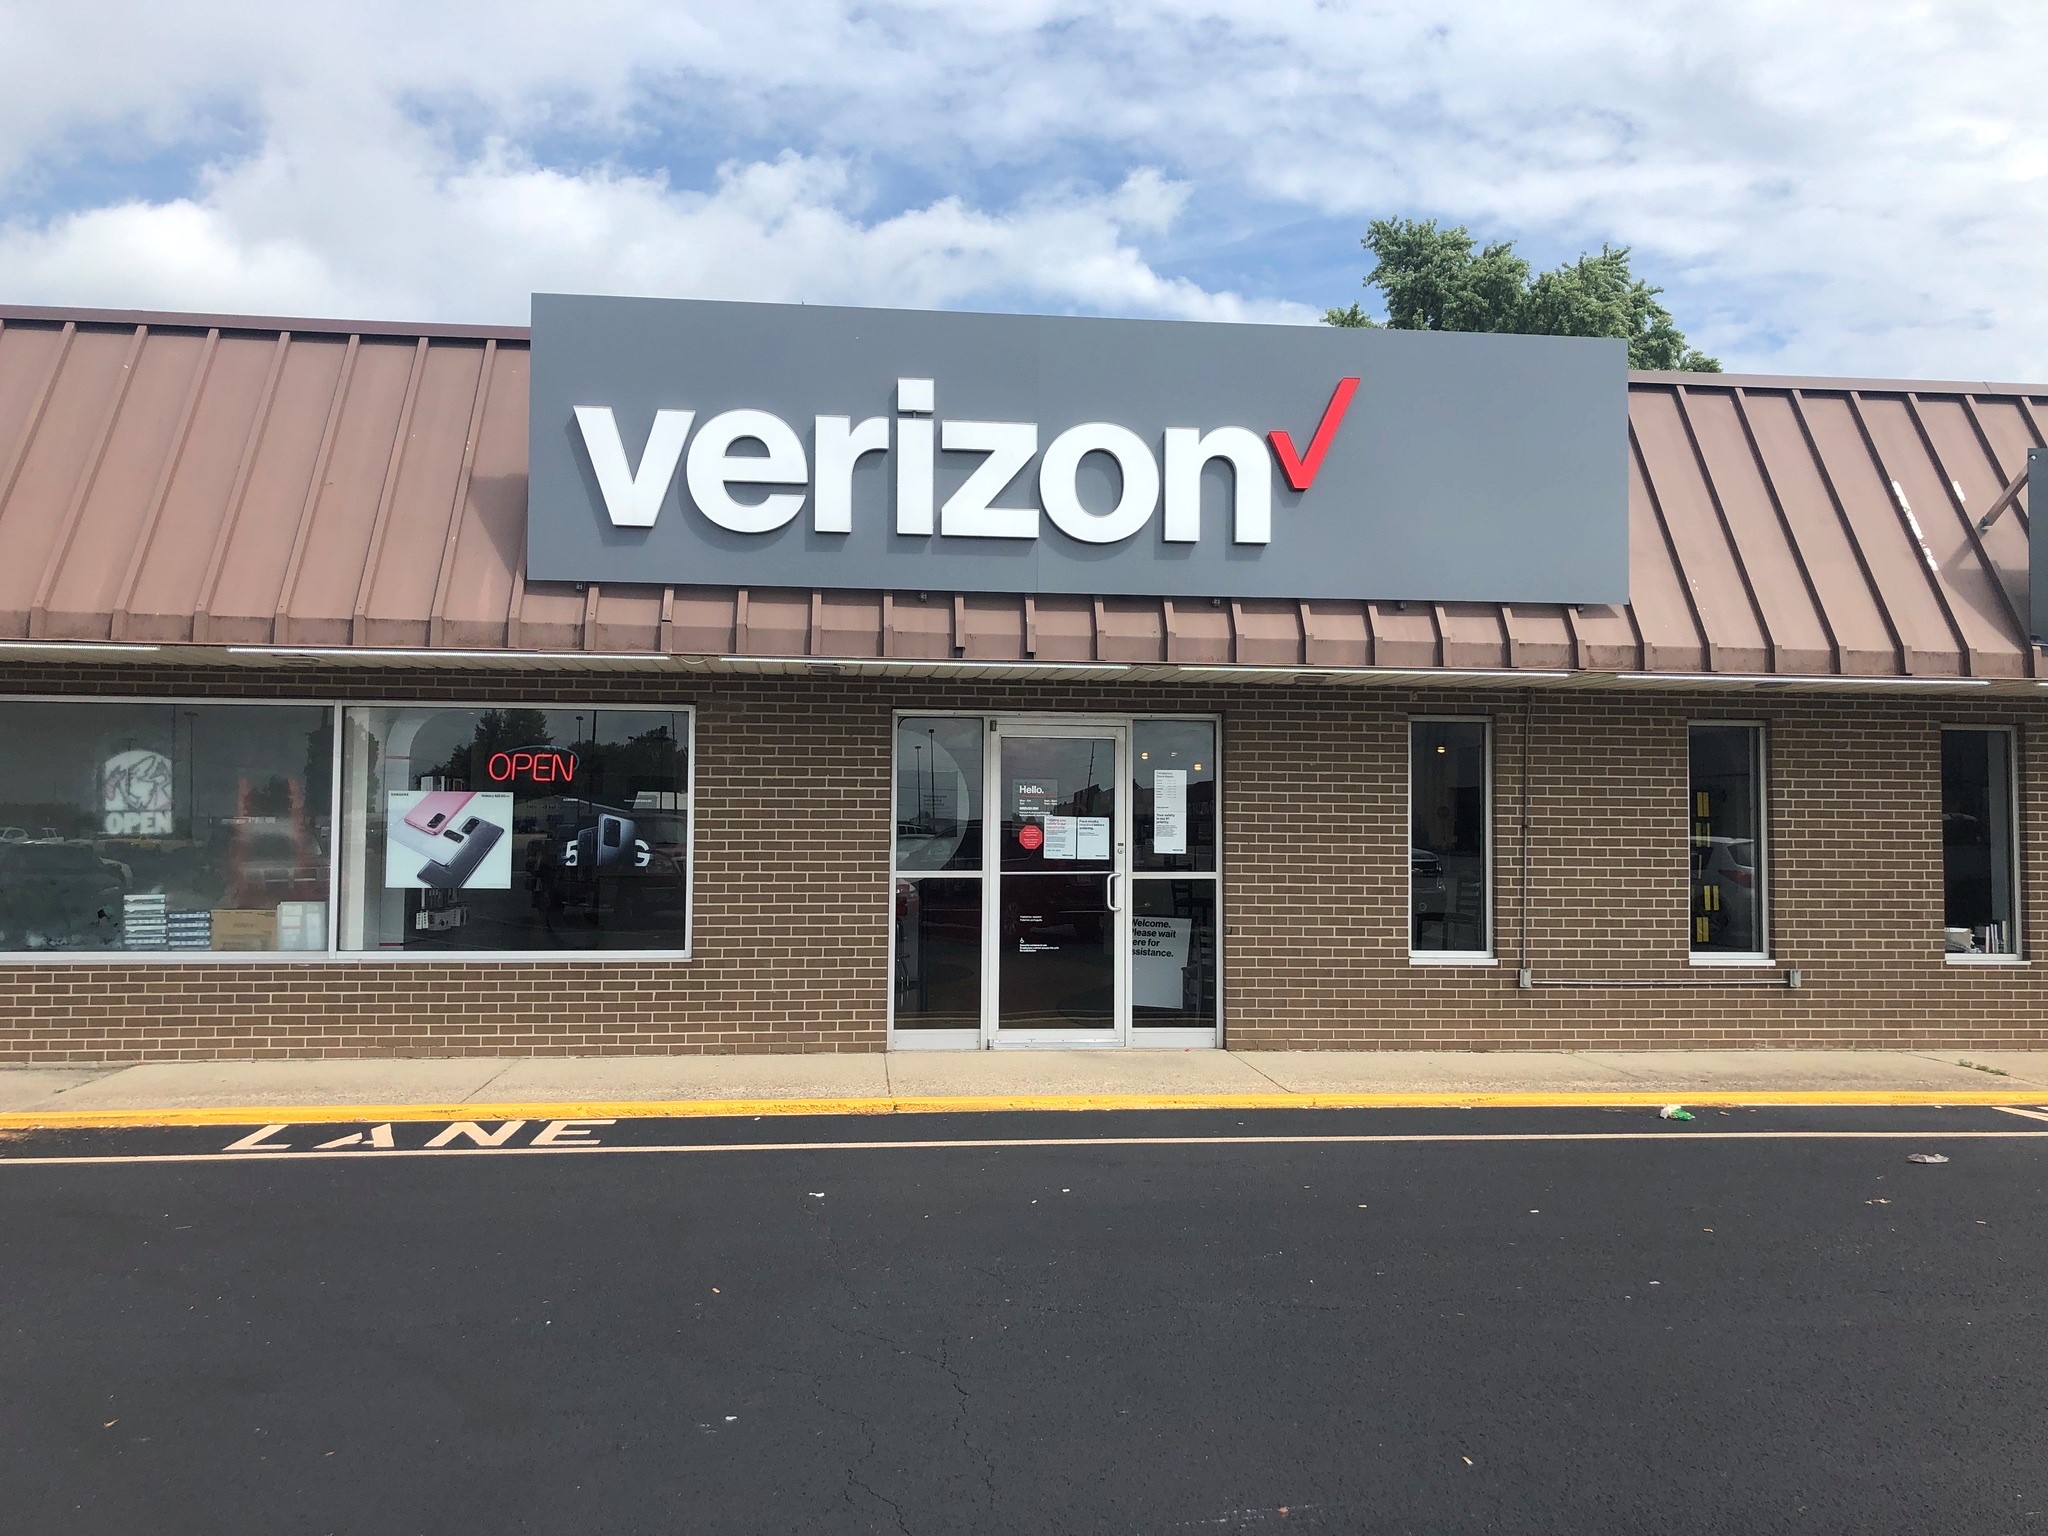 Wireless Zone® of Elmwood, Verizon Authorized Retailer
1503 S State Rd 37
Elmwood, IN